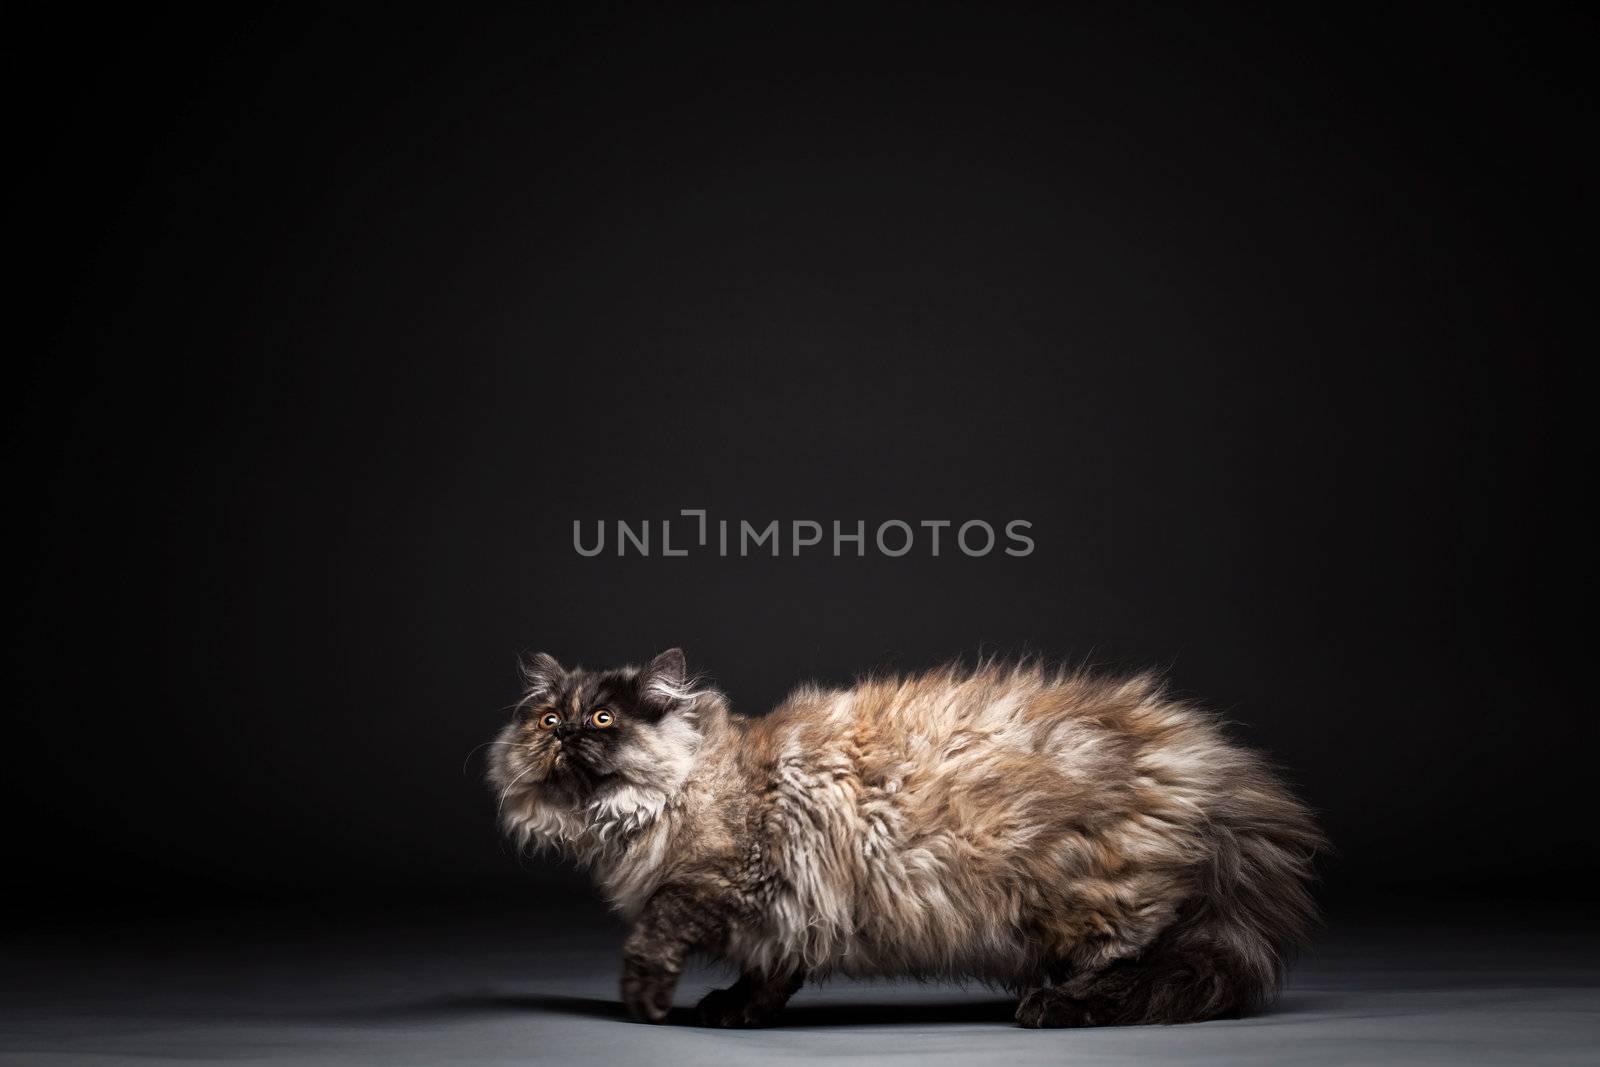 Chinchilla persian little kitty against dark background